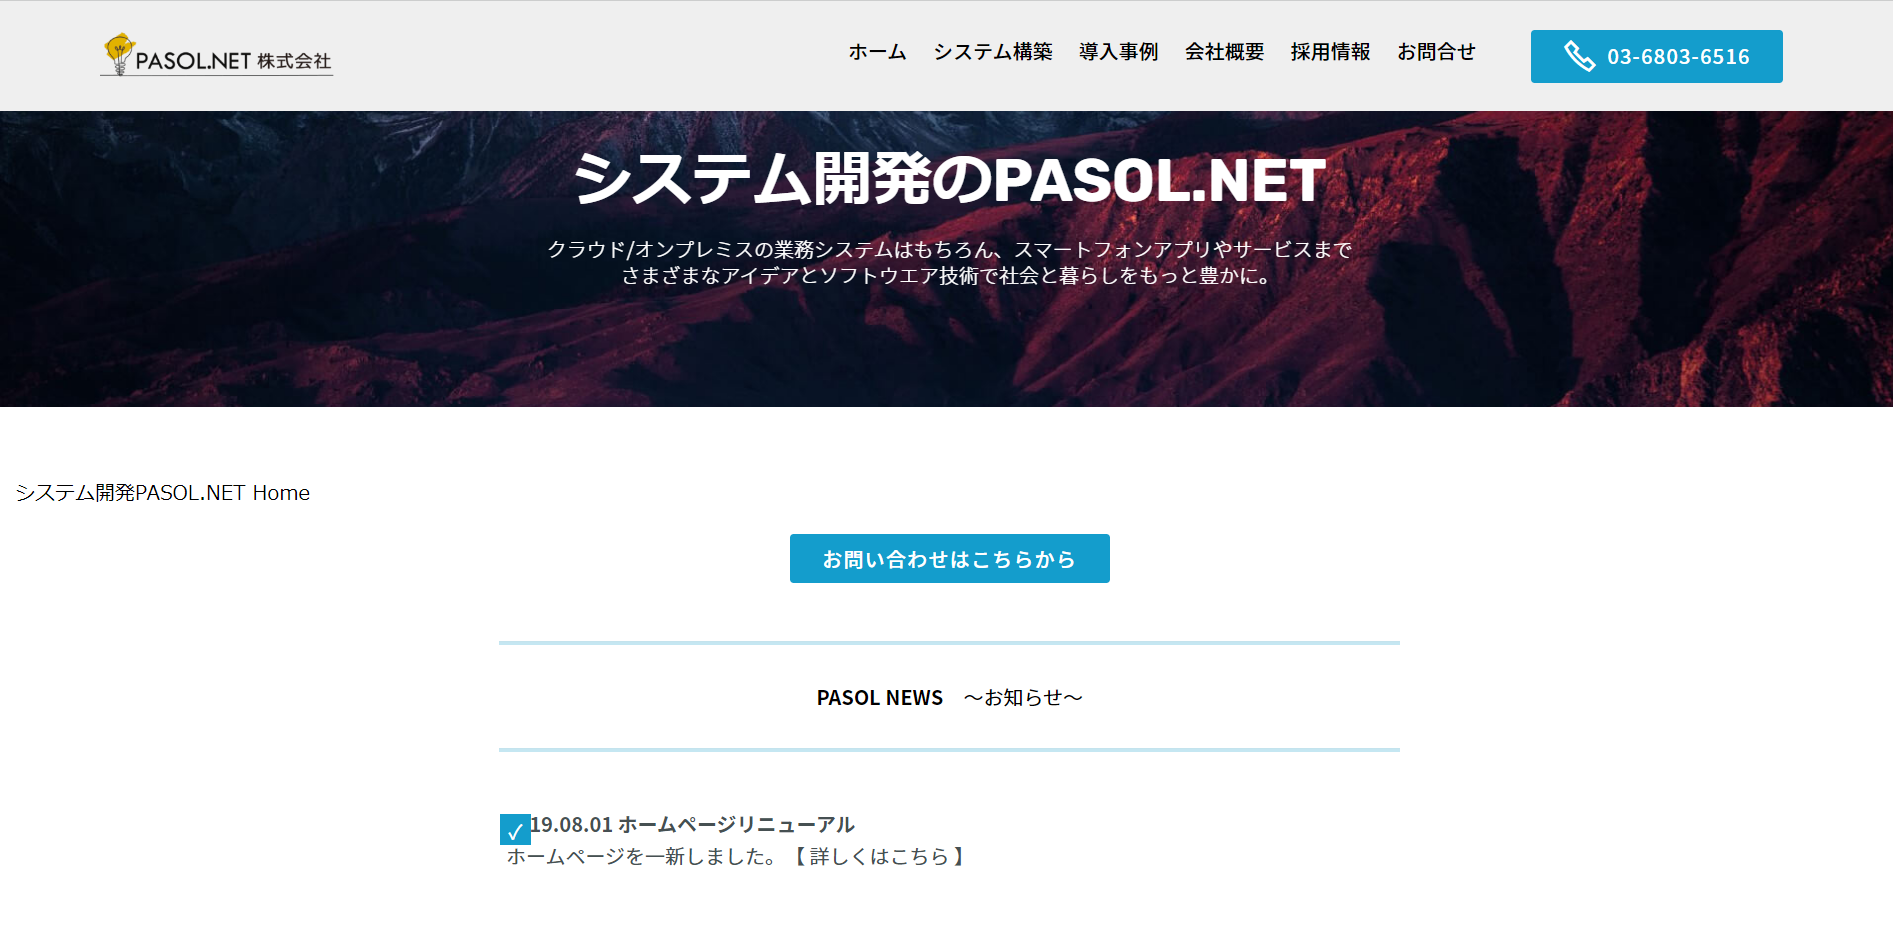 PASOL.NET株式会社のPASOL.NET株式会社:ECサイト構築サービス